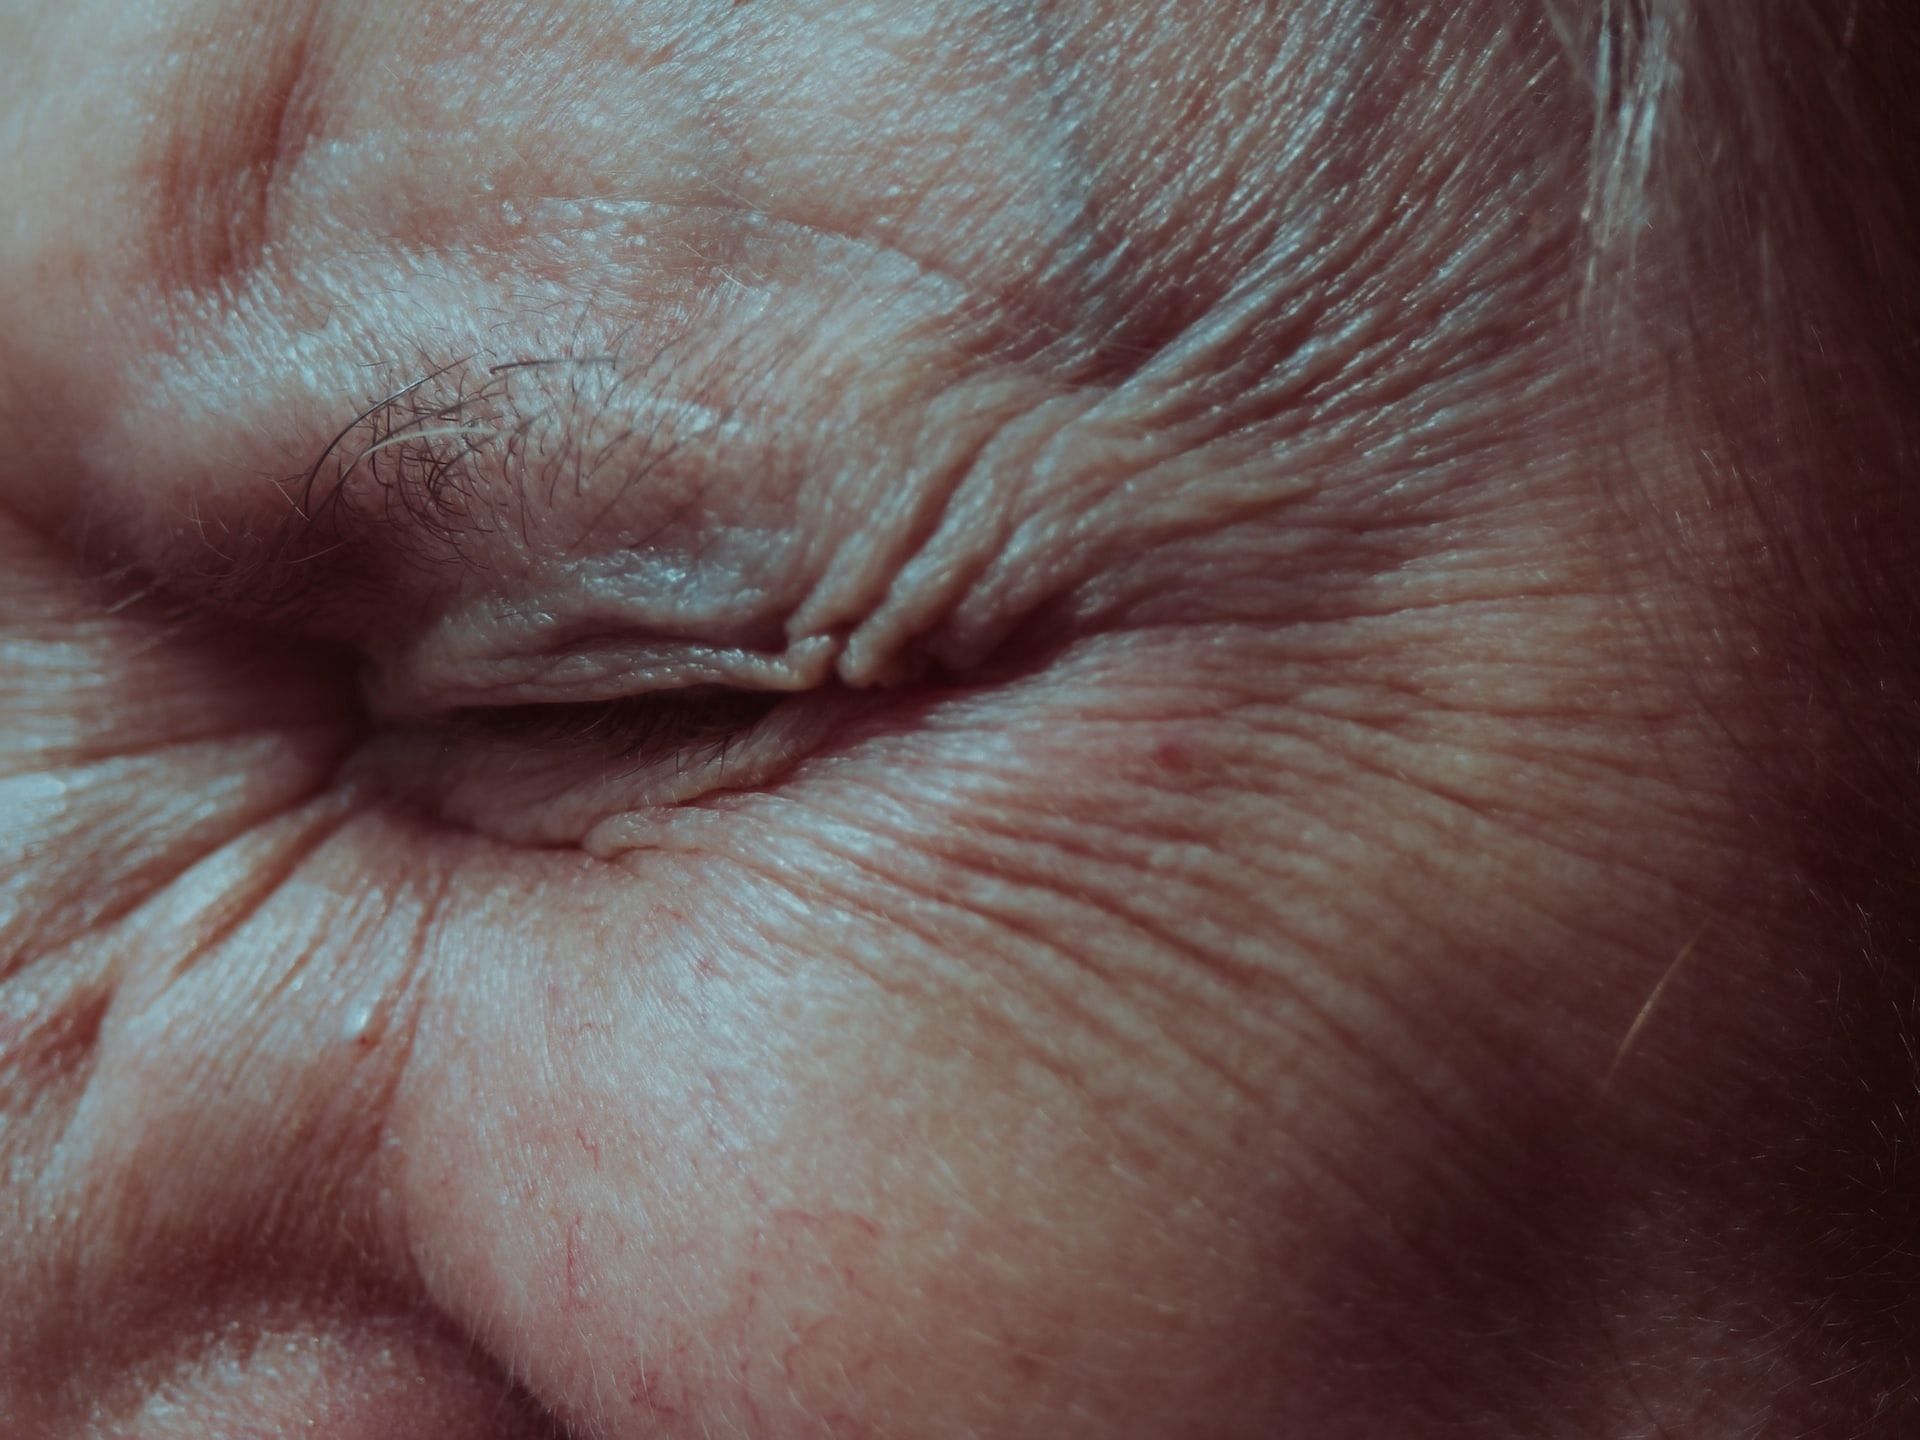 Wrinkles (Photo via Anita Jankovic/Unsplash)